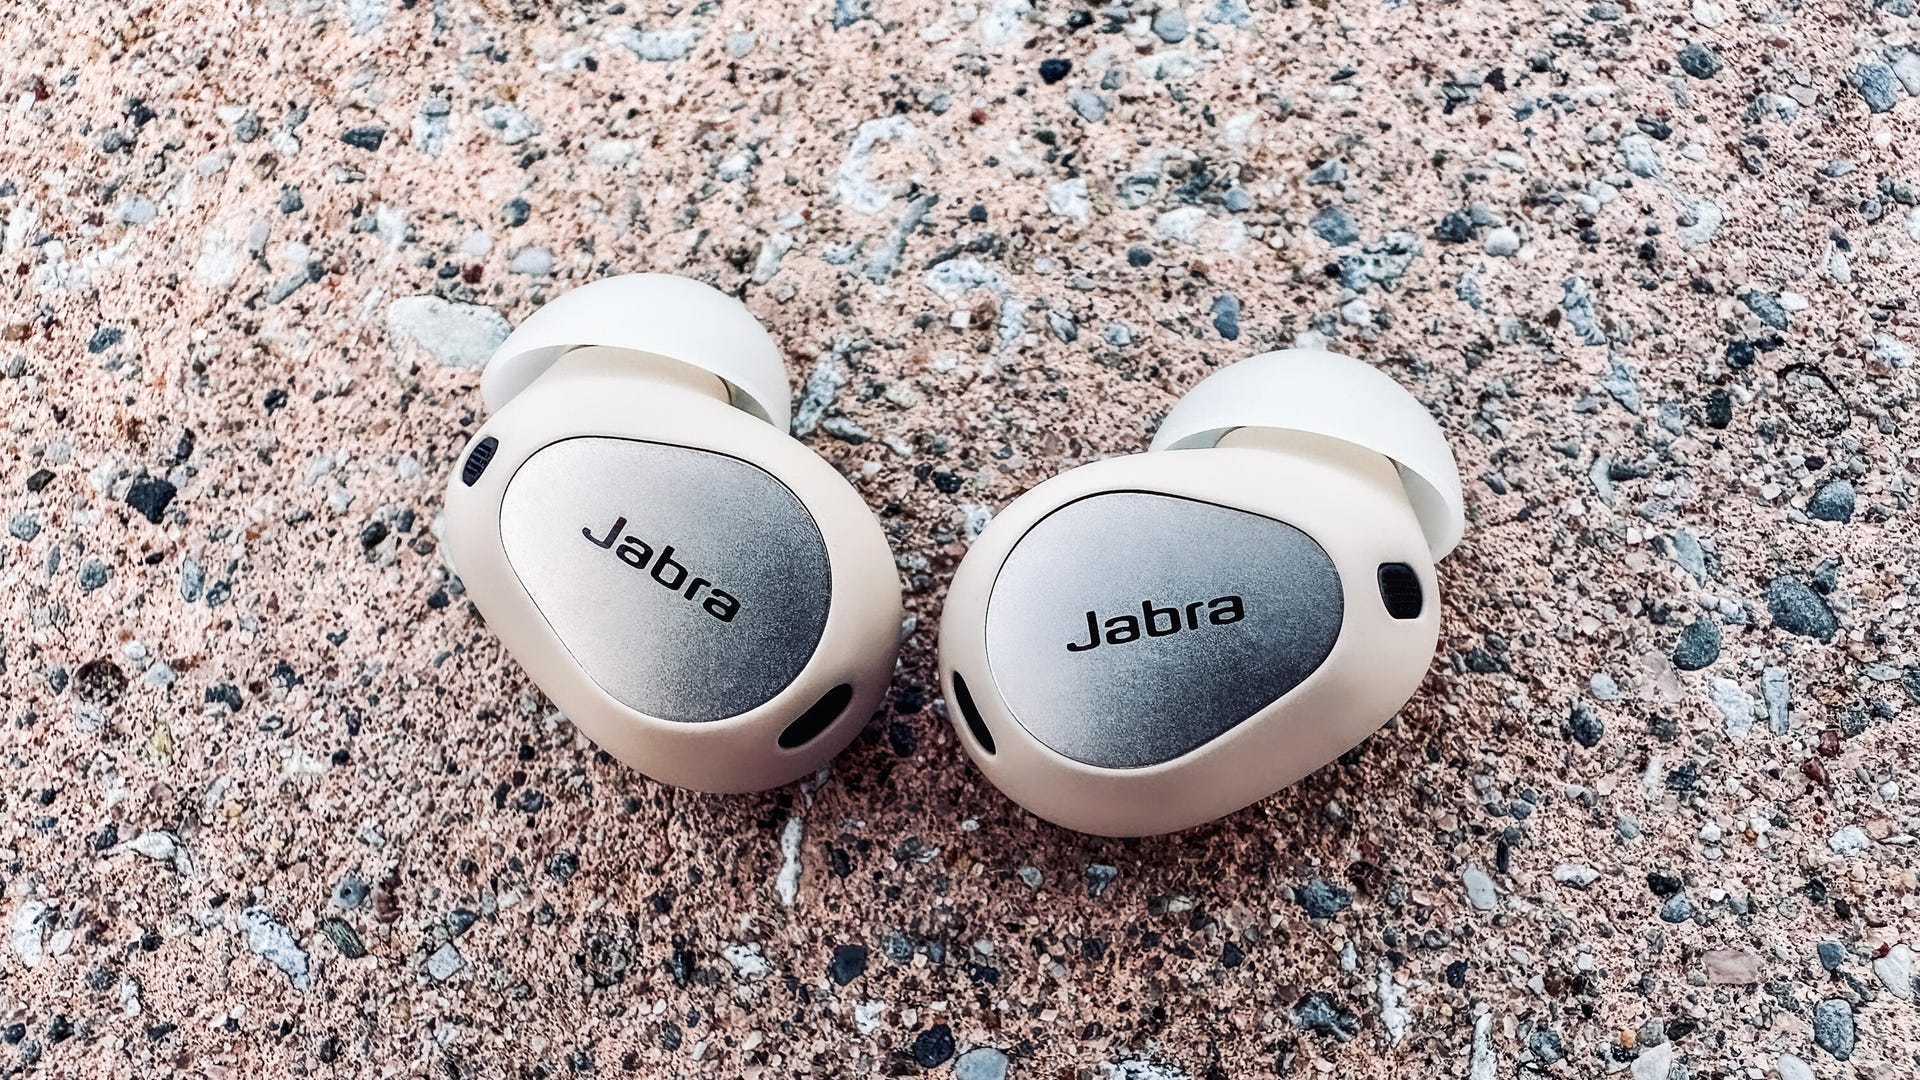 The Jabra Elite 10 are designed for long listening sessions